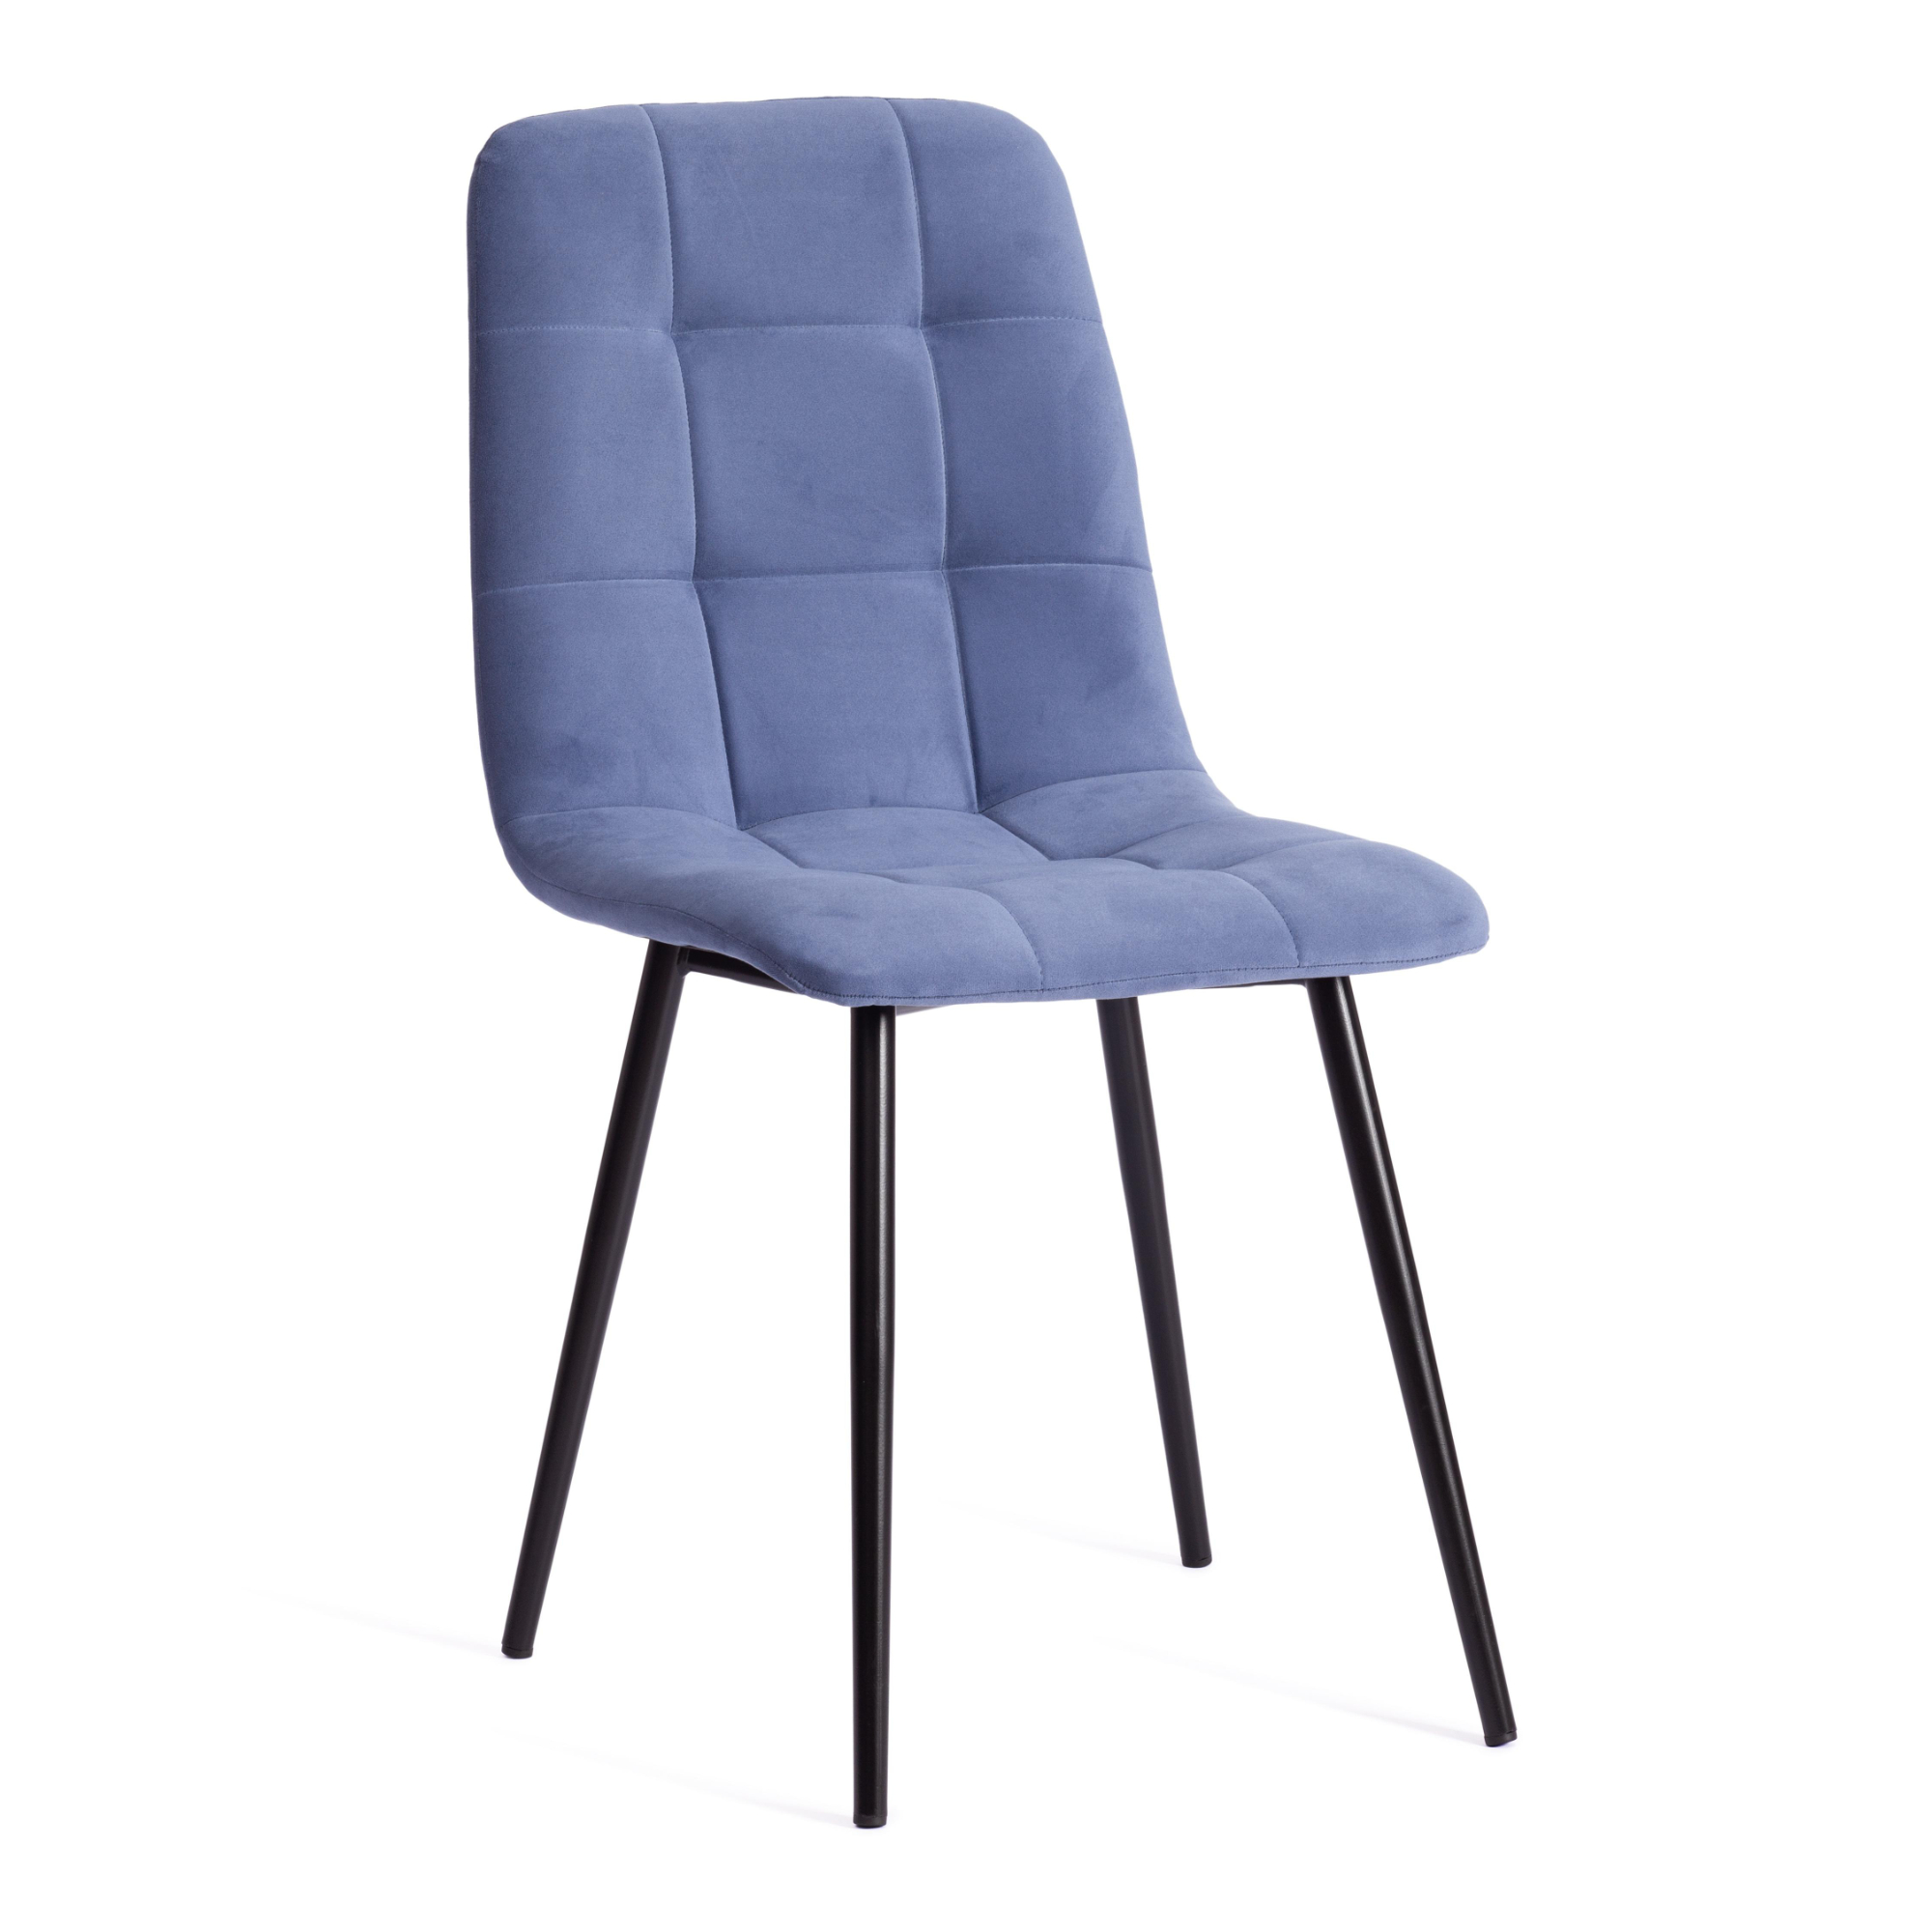 Стул ТС Chilly max серо-голубой вельвет 45х54х90 см стул для кухни chilly рогожка голубой ножки белые комплект 4 стула